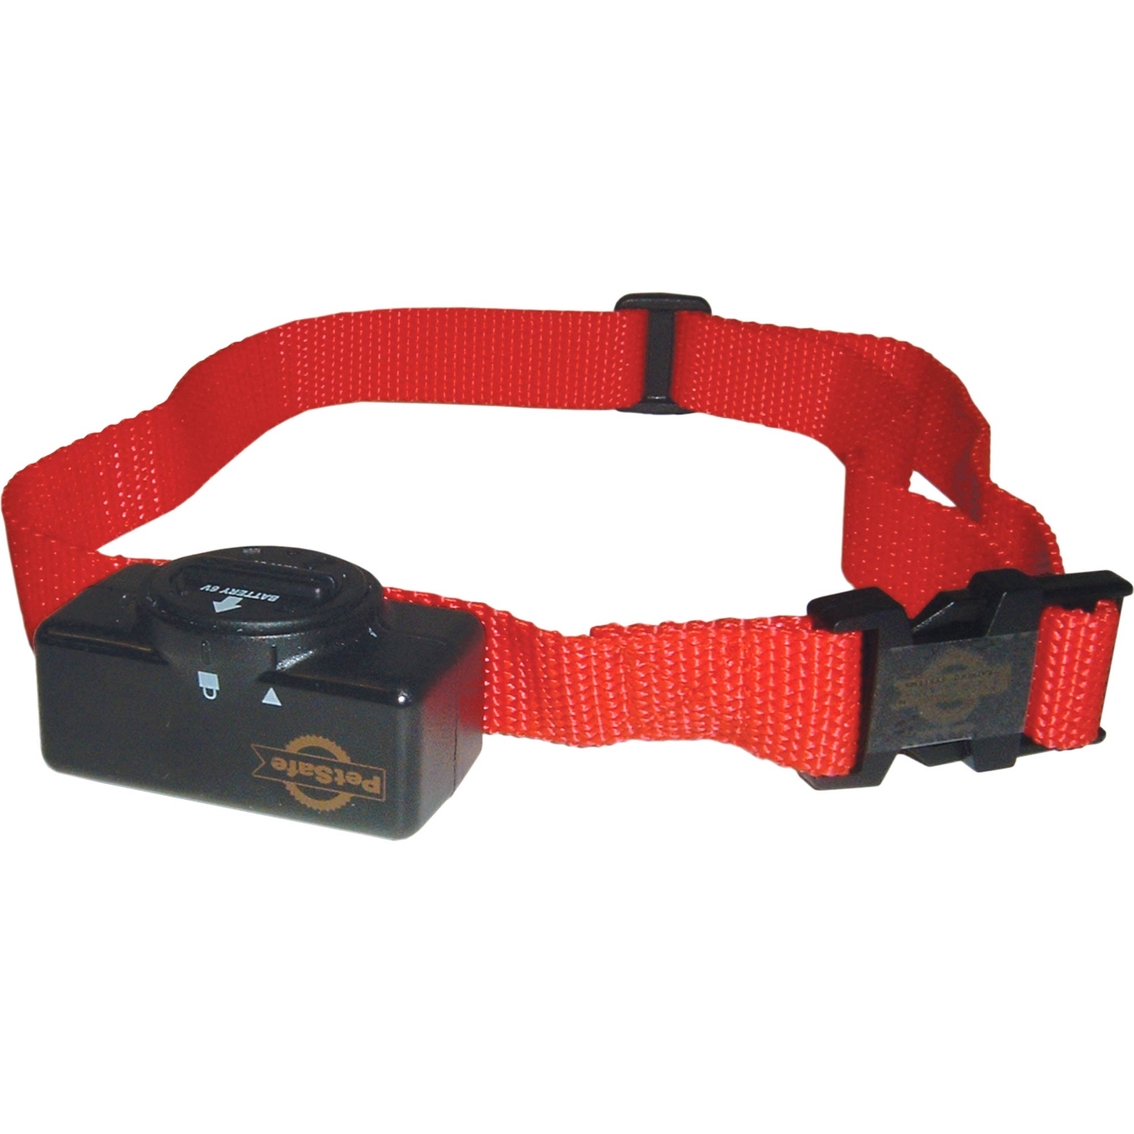 PetSafe Basic Bark Collar - Image 2 of 3